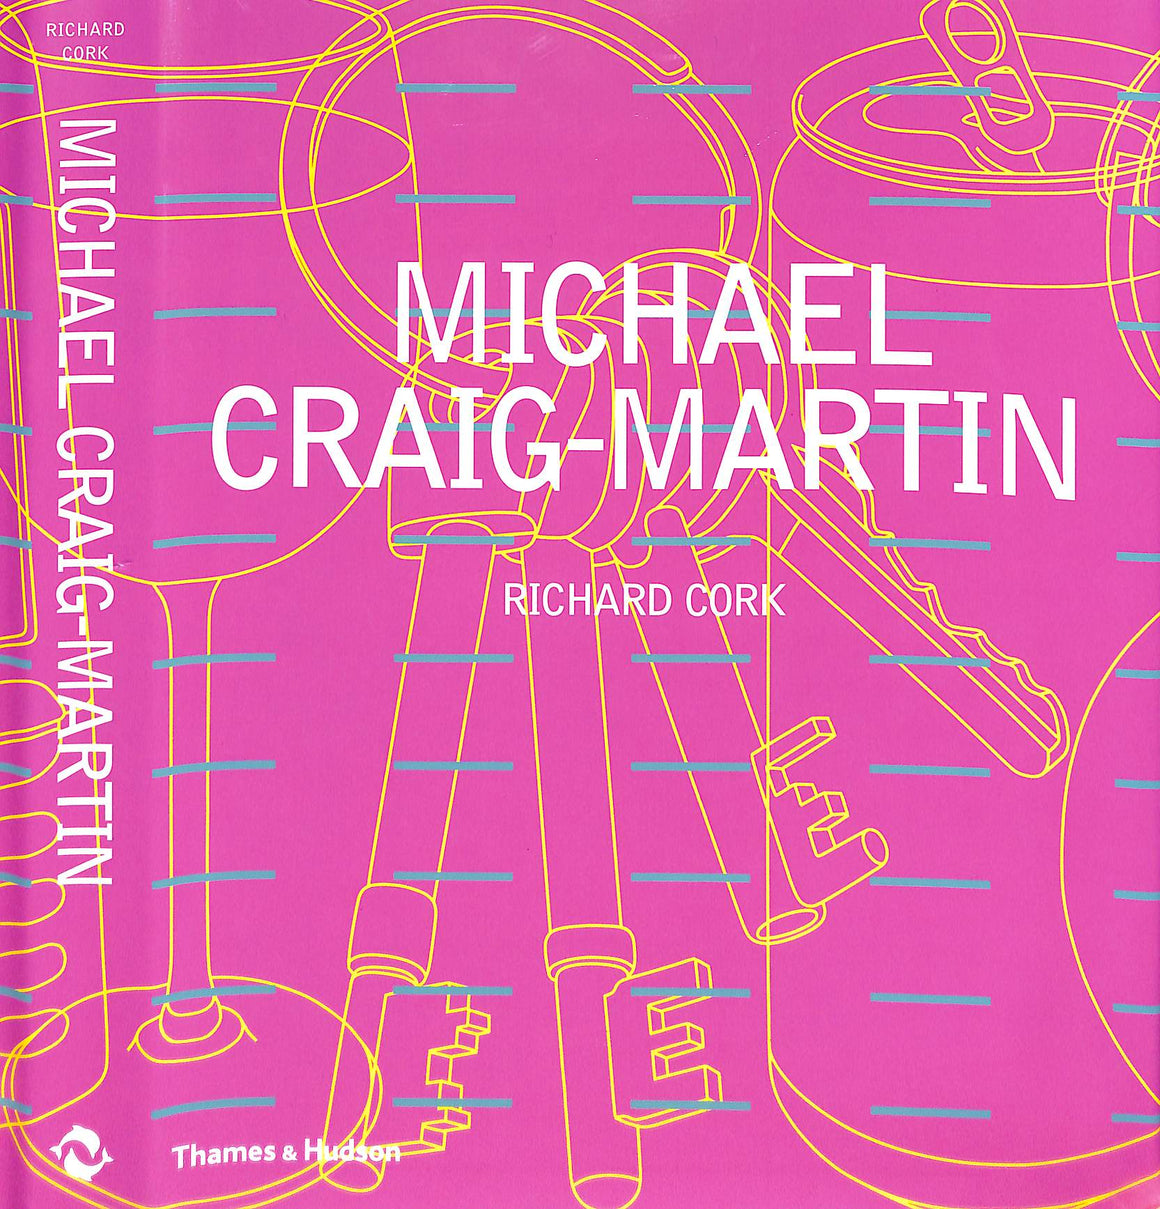 "Michael Craig-Martin" 2006 CORK, Richard